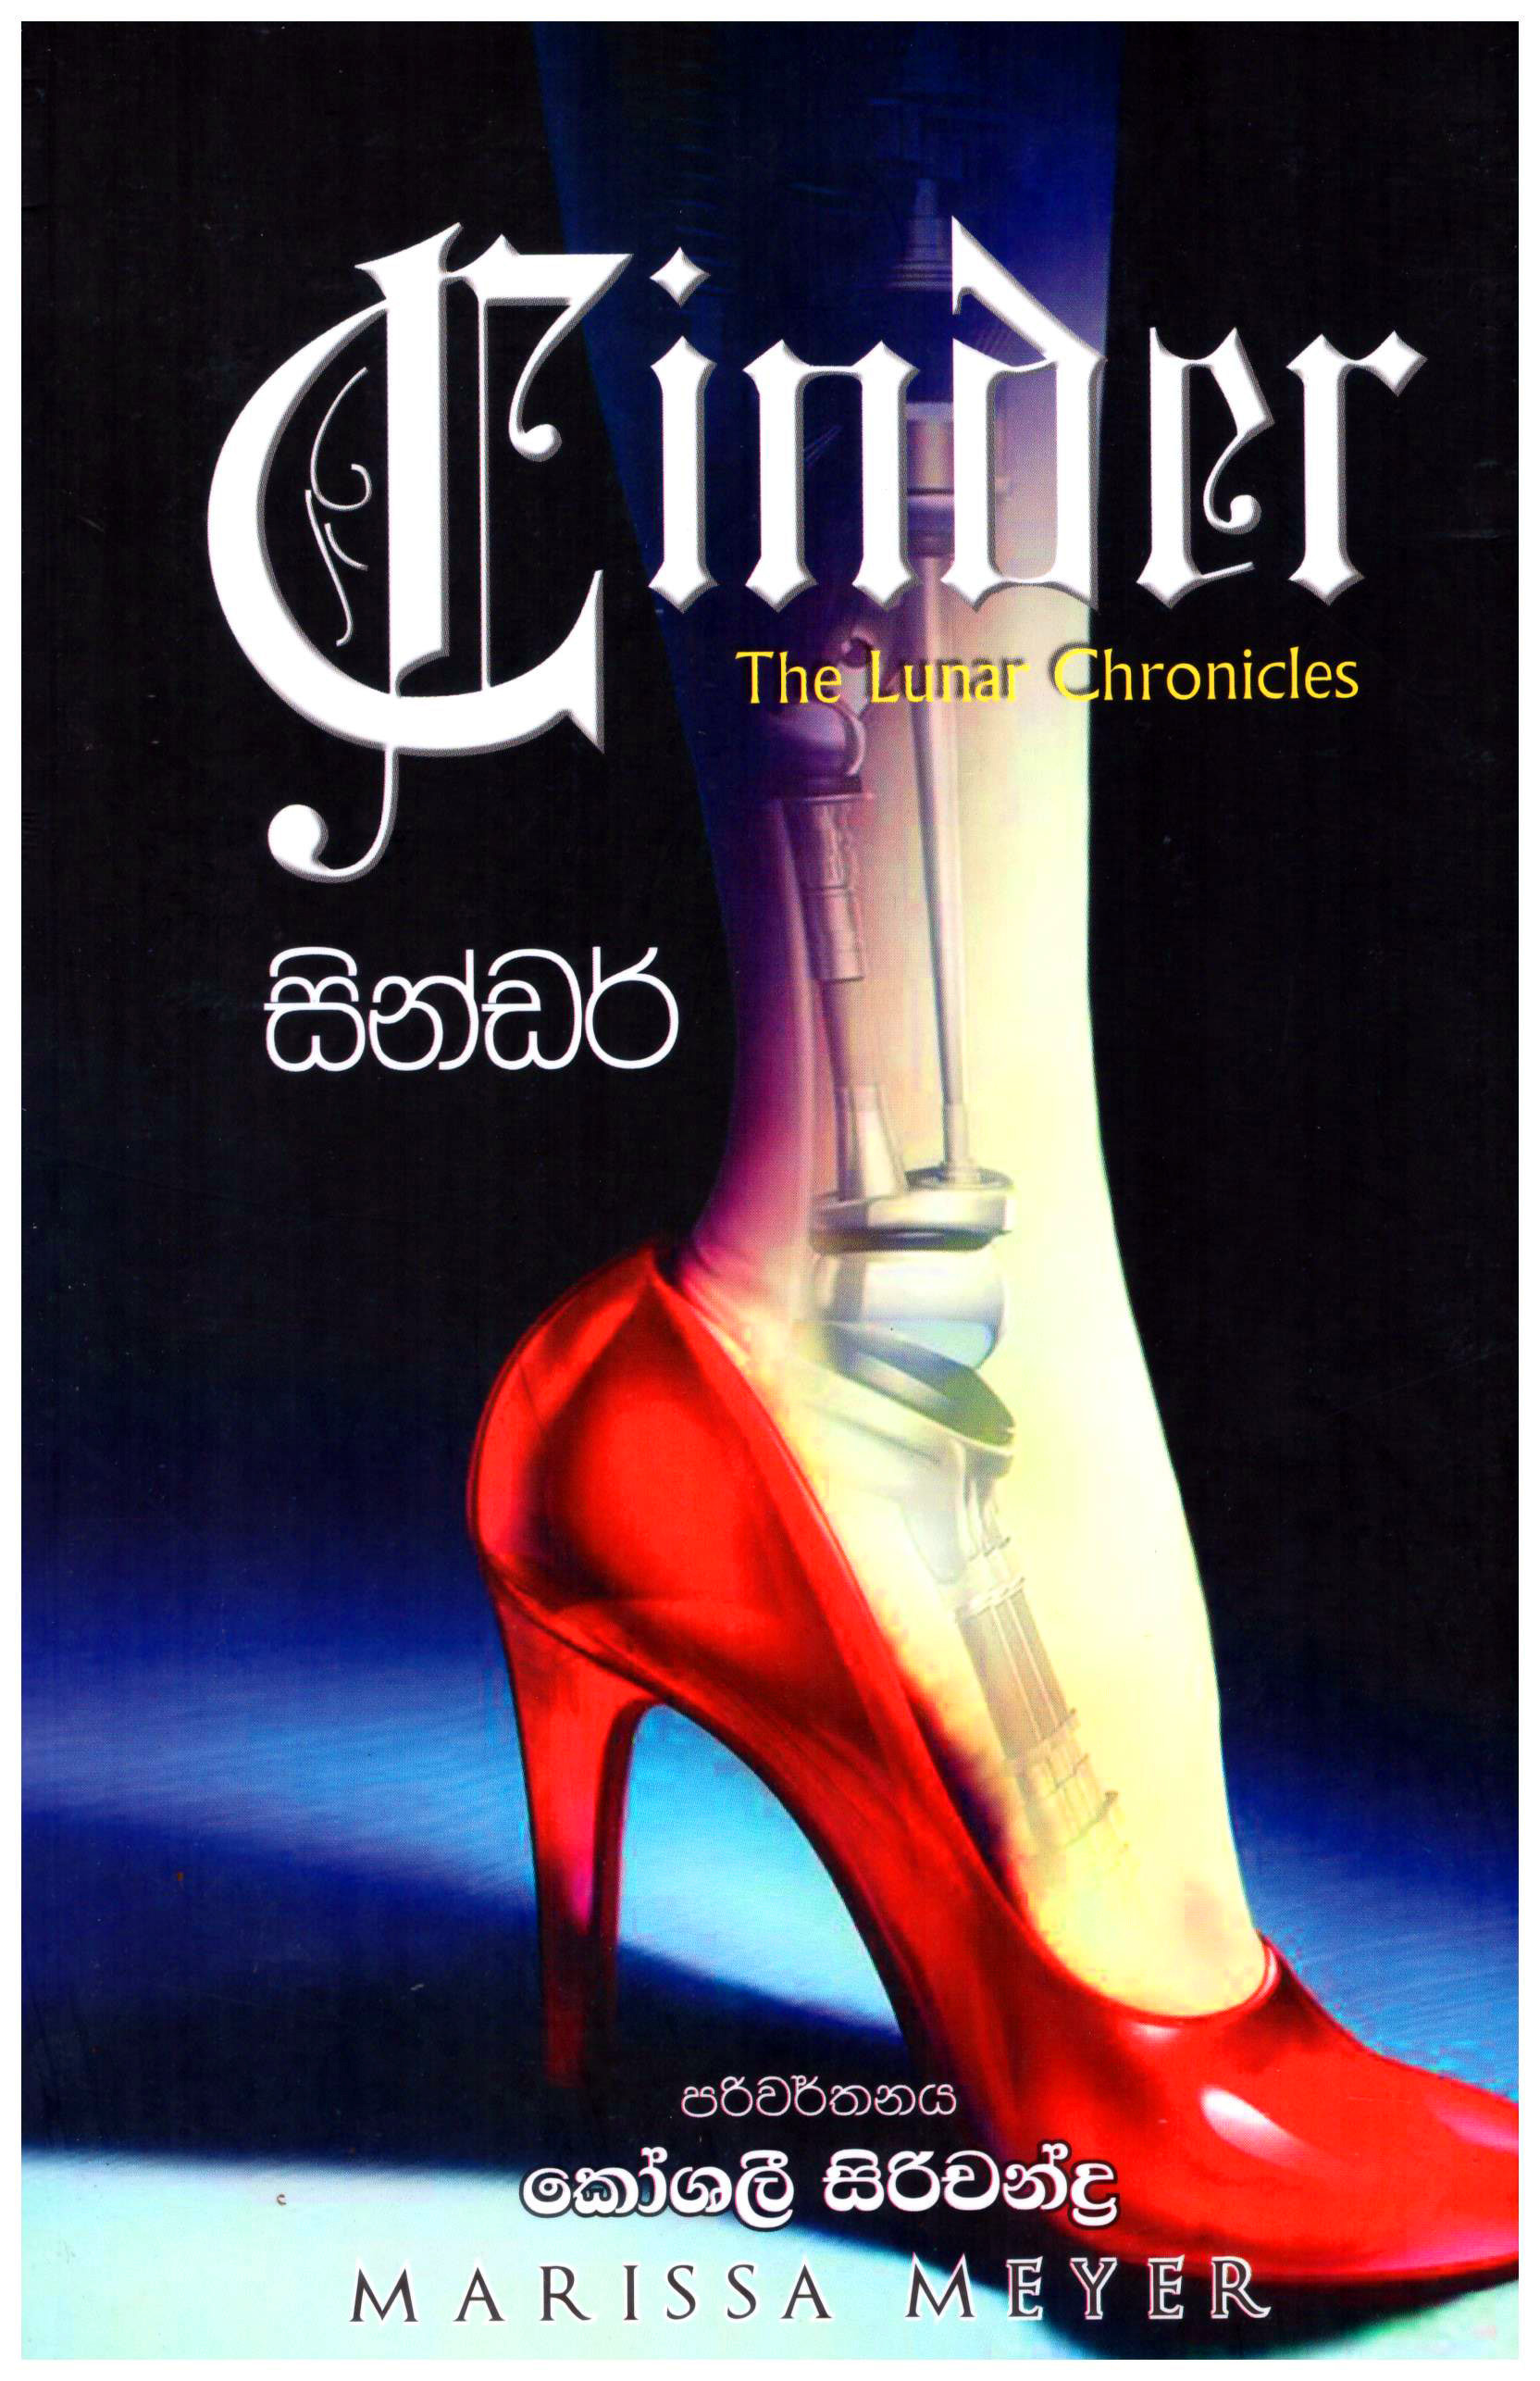 Cinder - Translations of The Lunar Chronicles : Cinder by Marissa Meyer